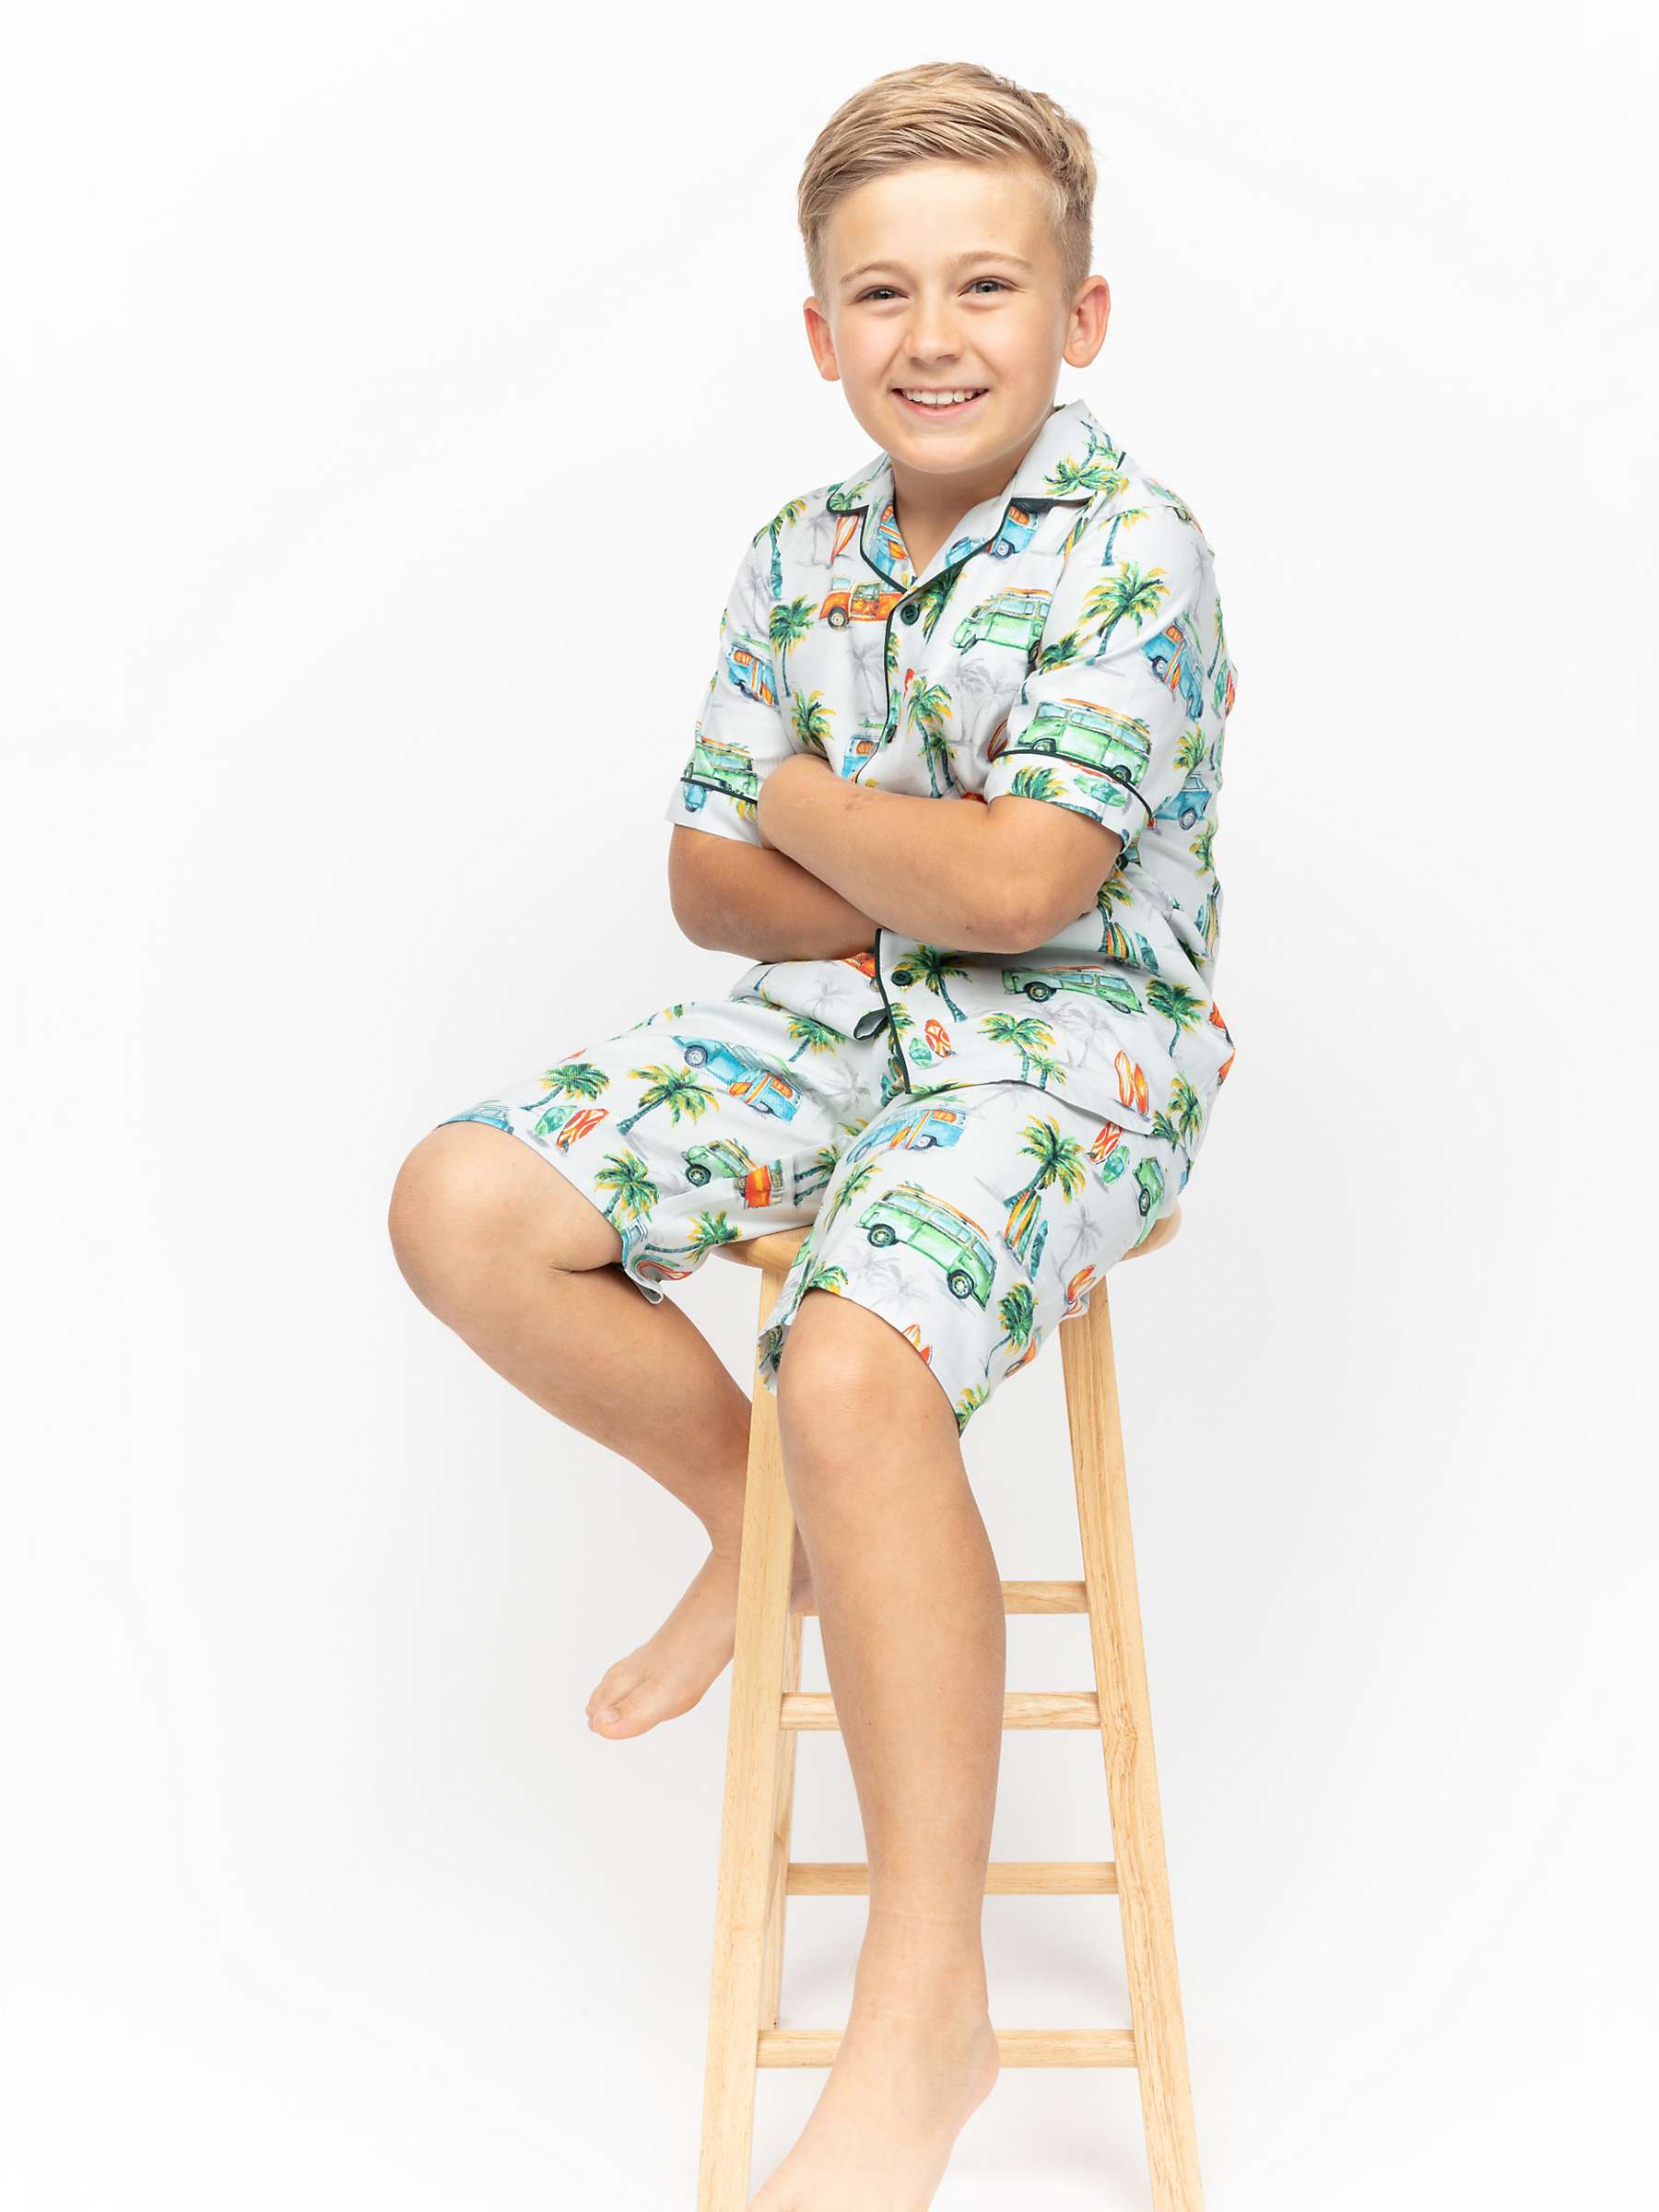 Buy Minijammies Kids' Bodhi Campervan Short Pyjama Set, Grey Online at johnlewis.com